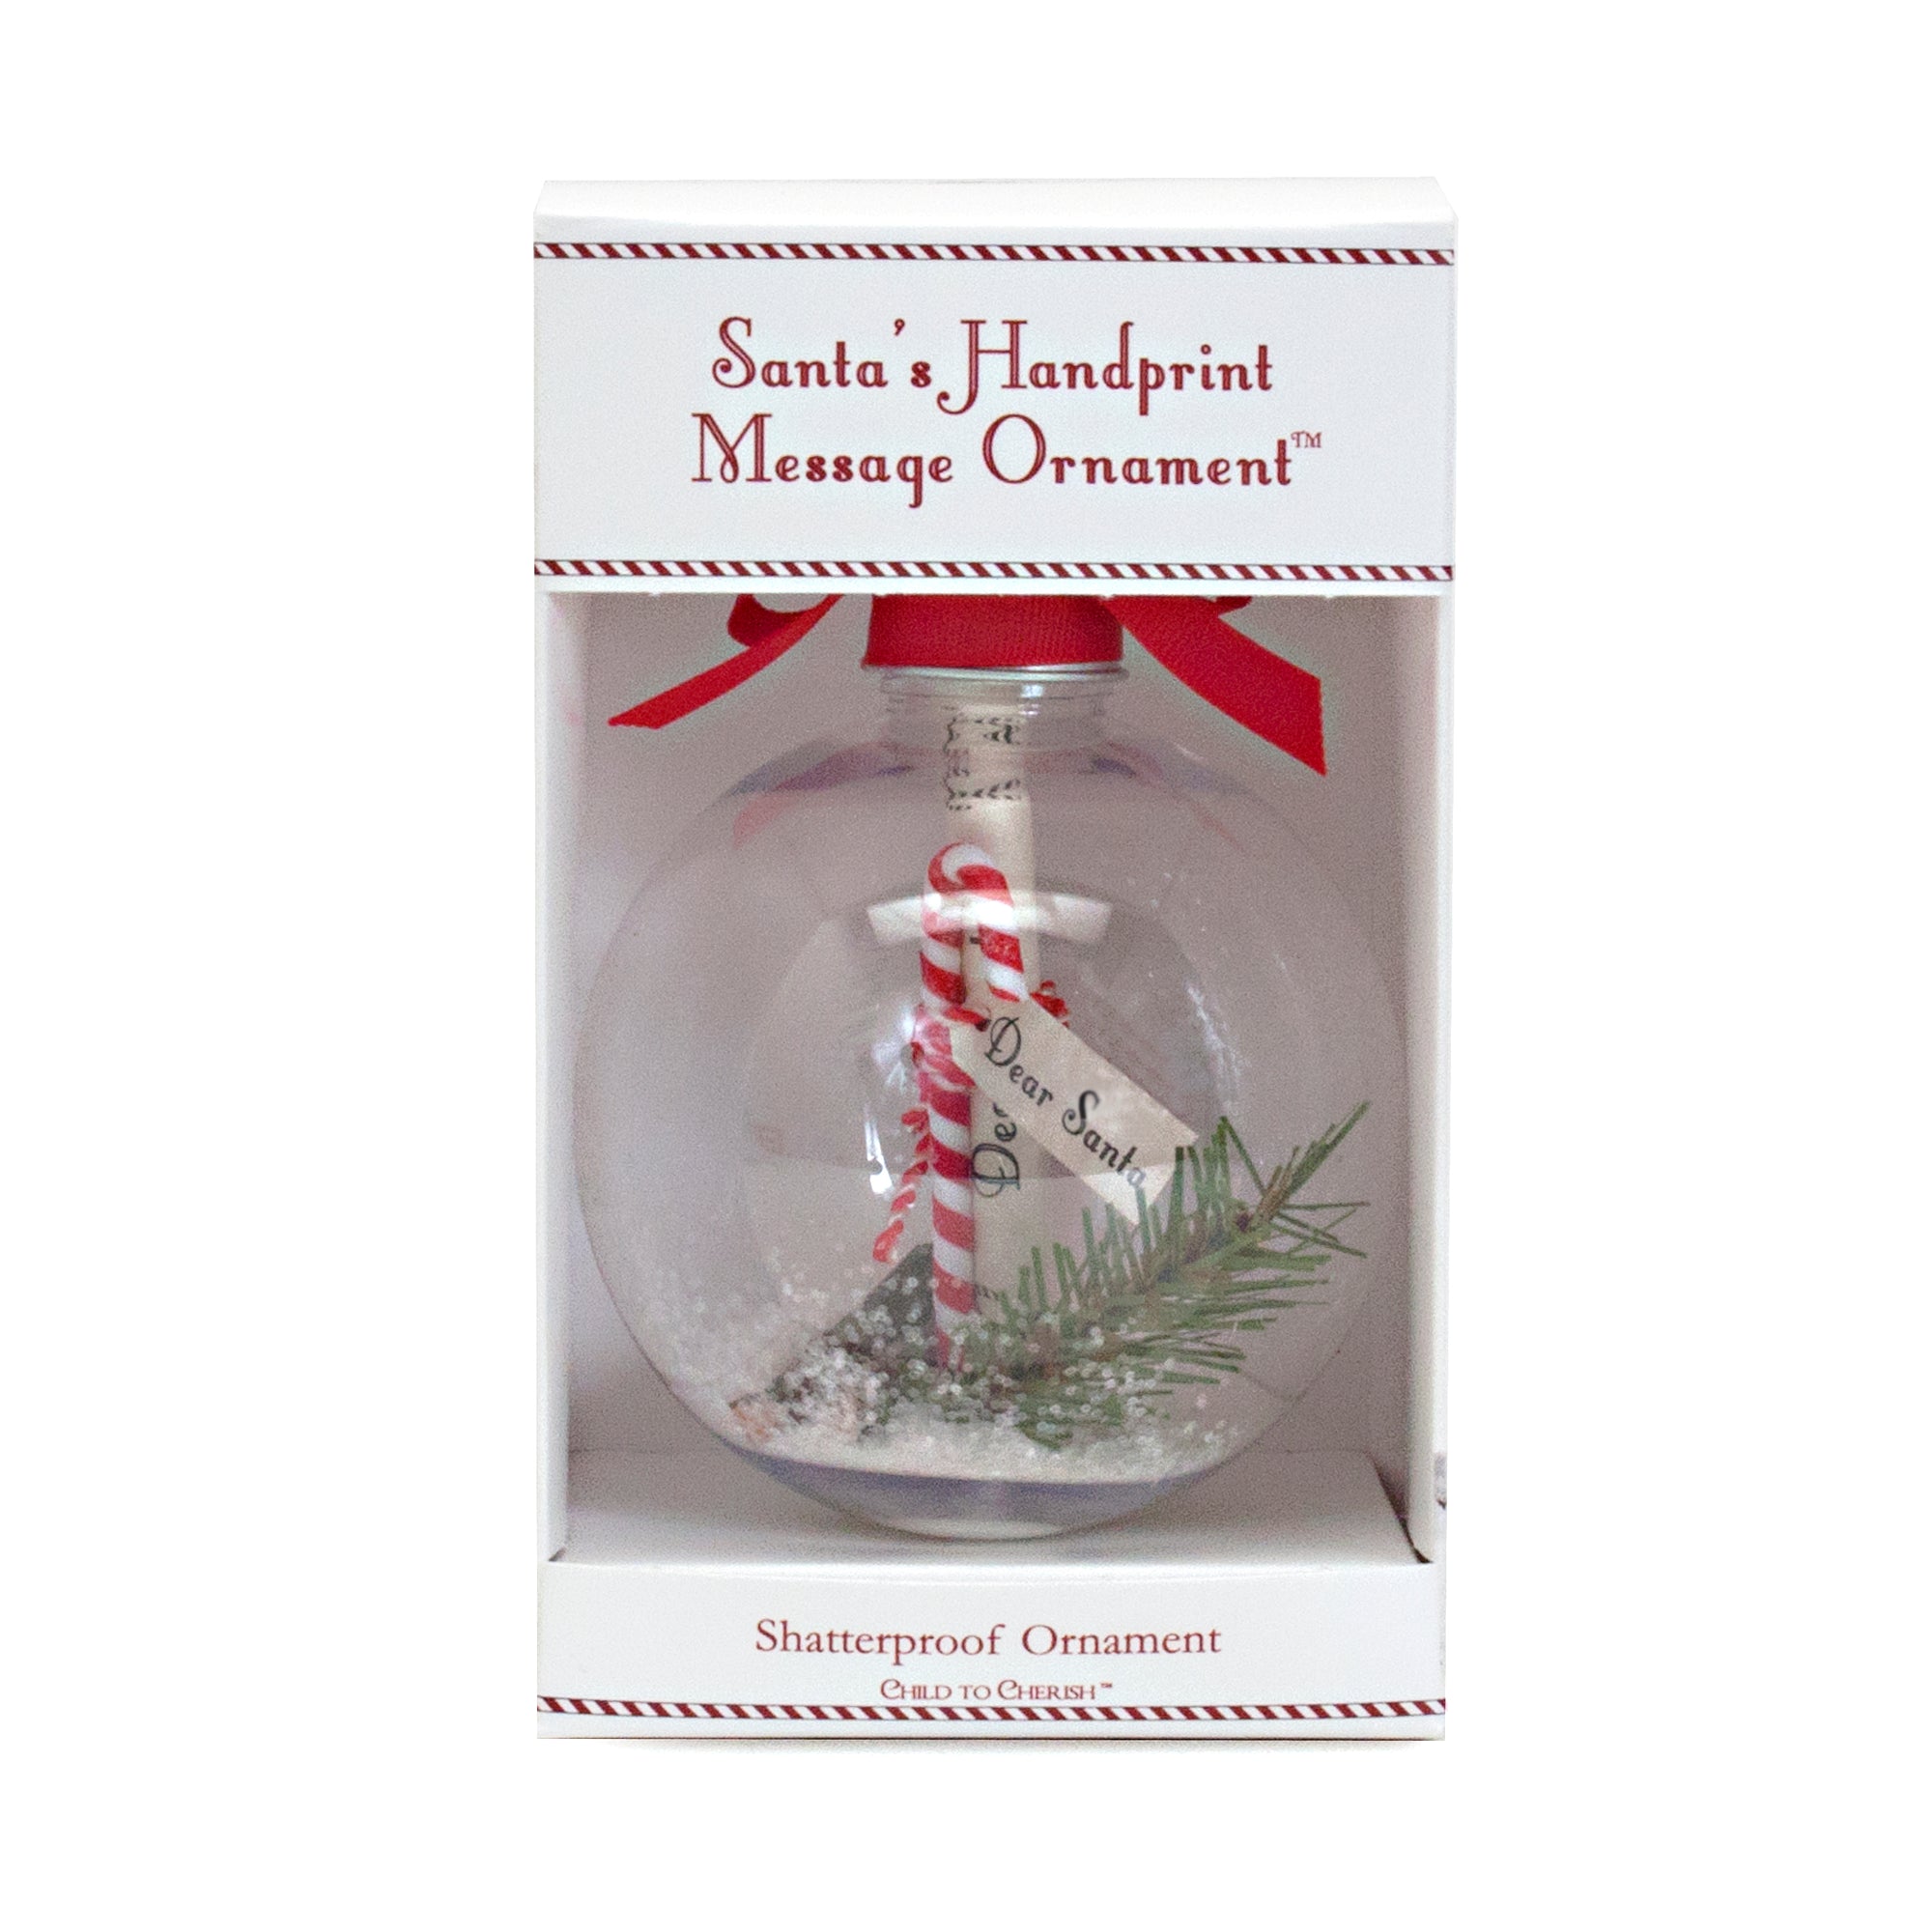 Santa's Handprint Message Ornament Kit